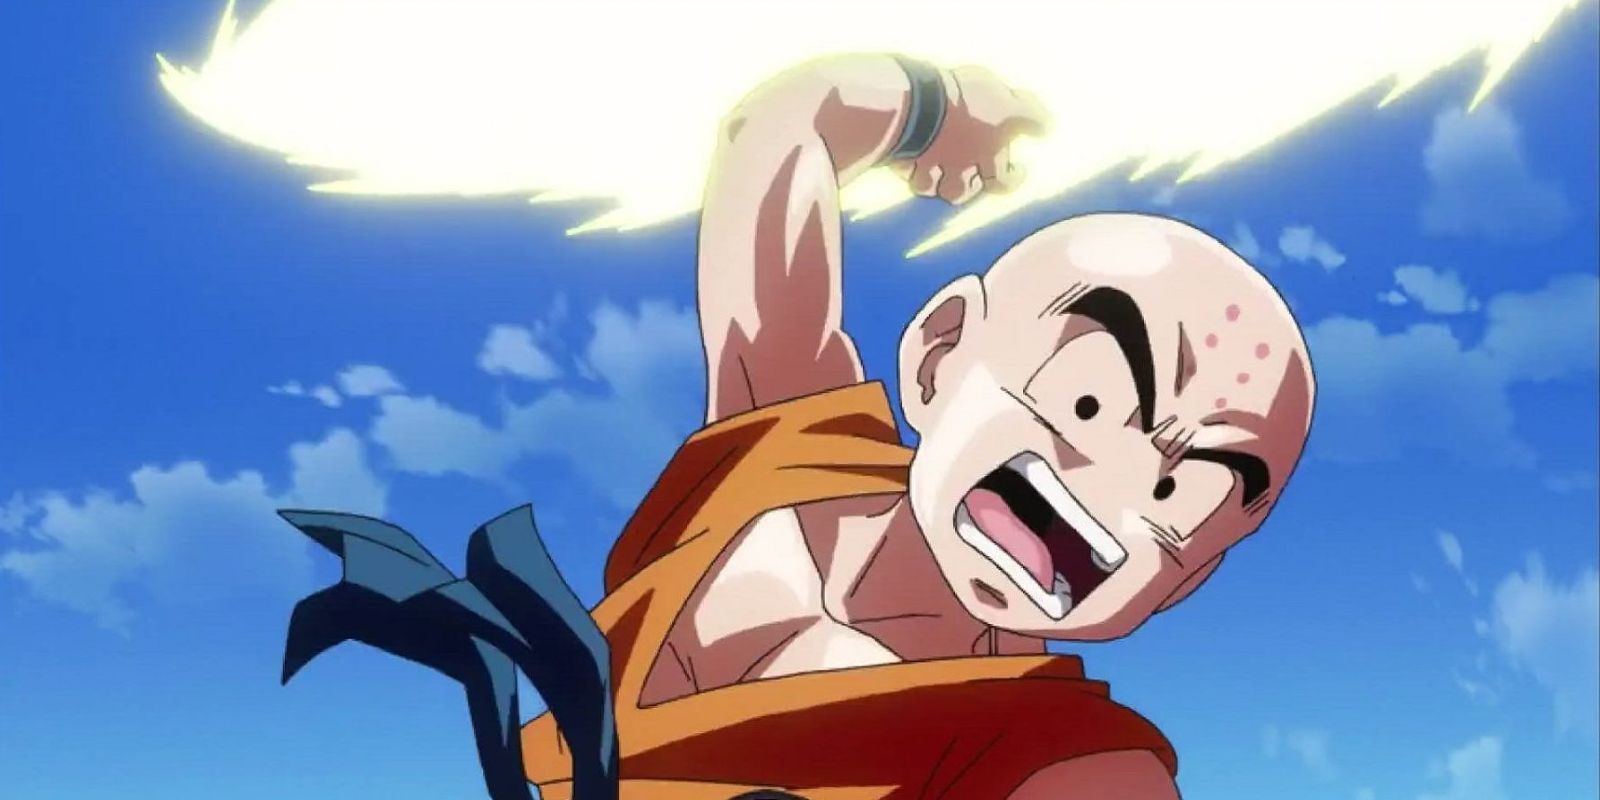 Krillin hurling a Destructo Disc in the Dragon Ball anime.